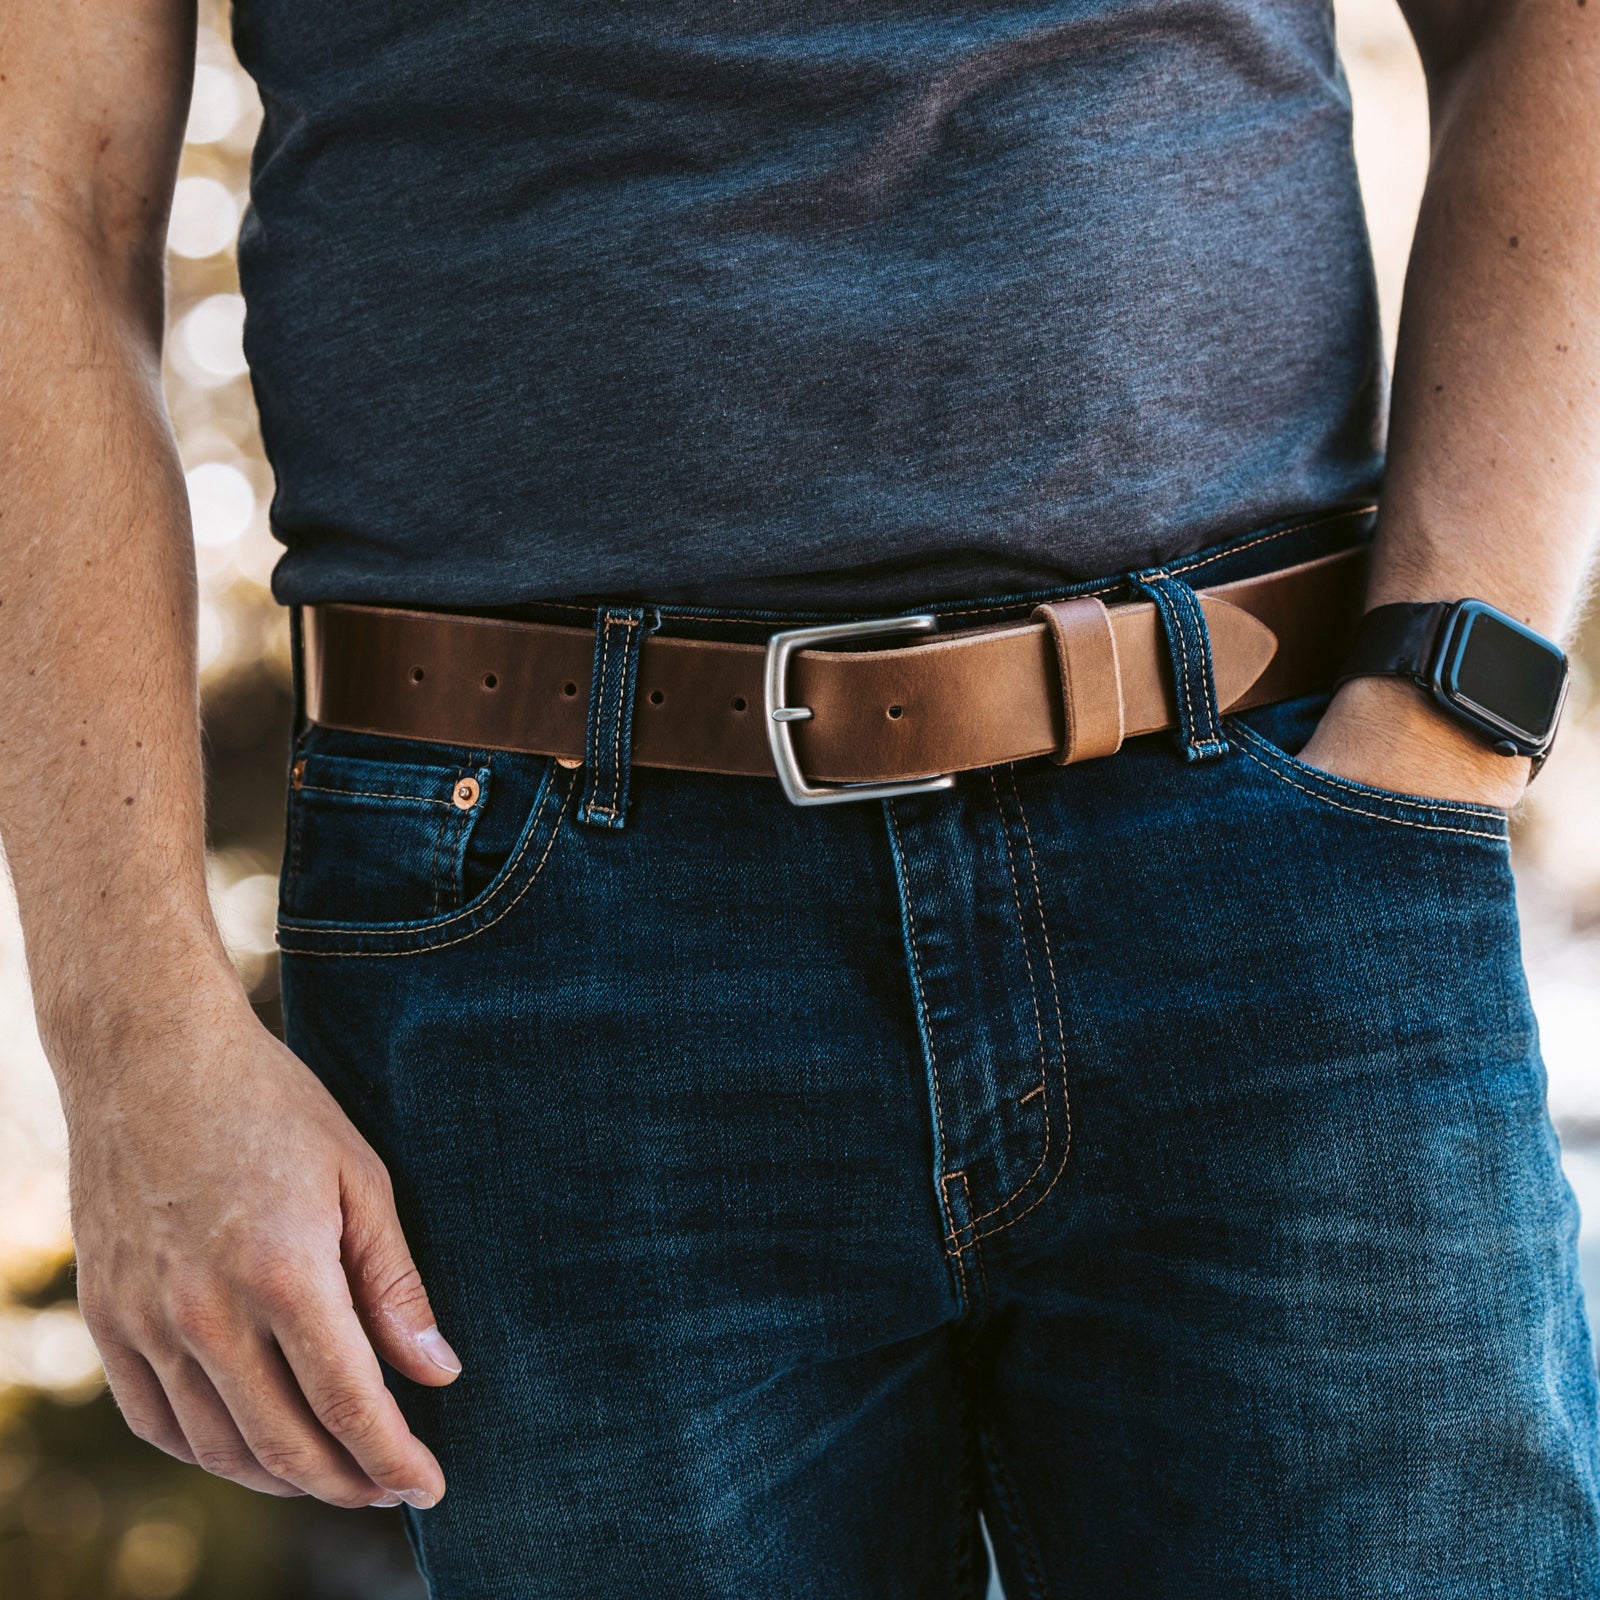 Men's fashion genuine leather belt - Buy Men's Leather Belts online